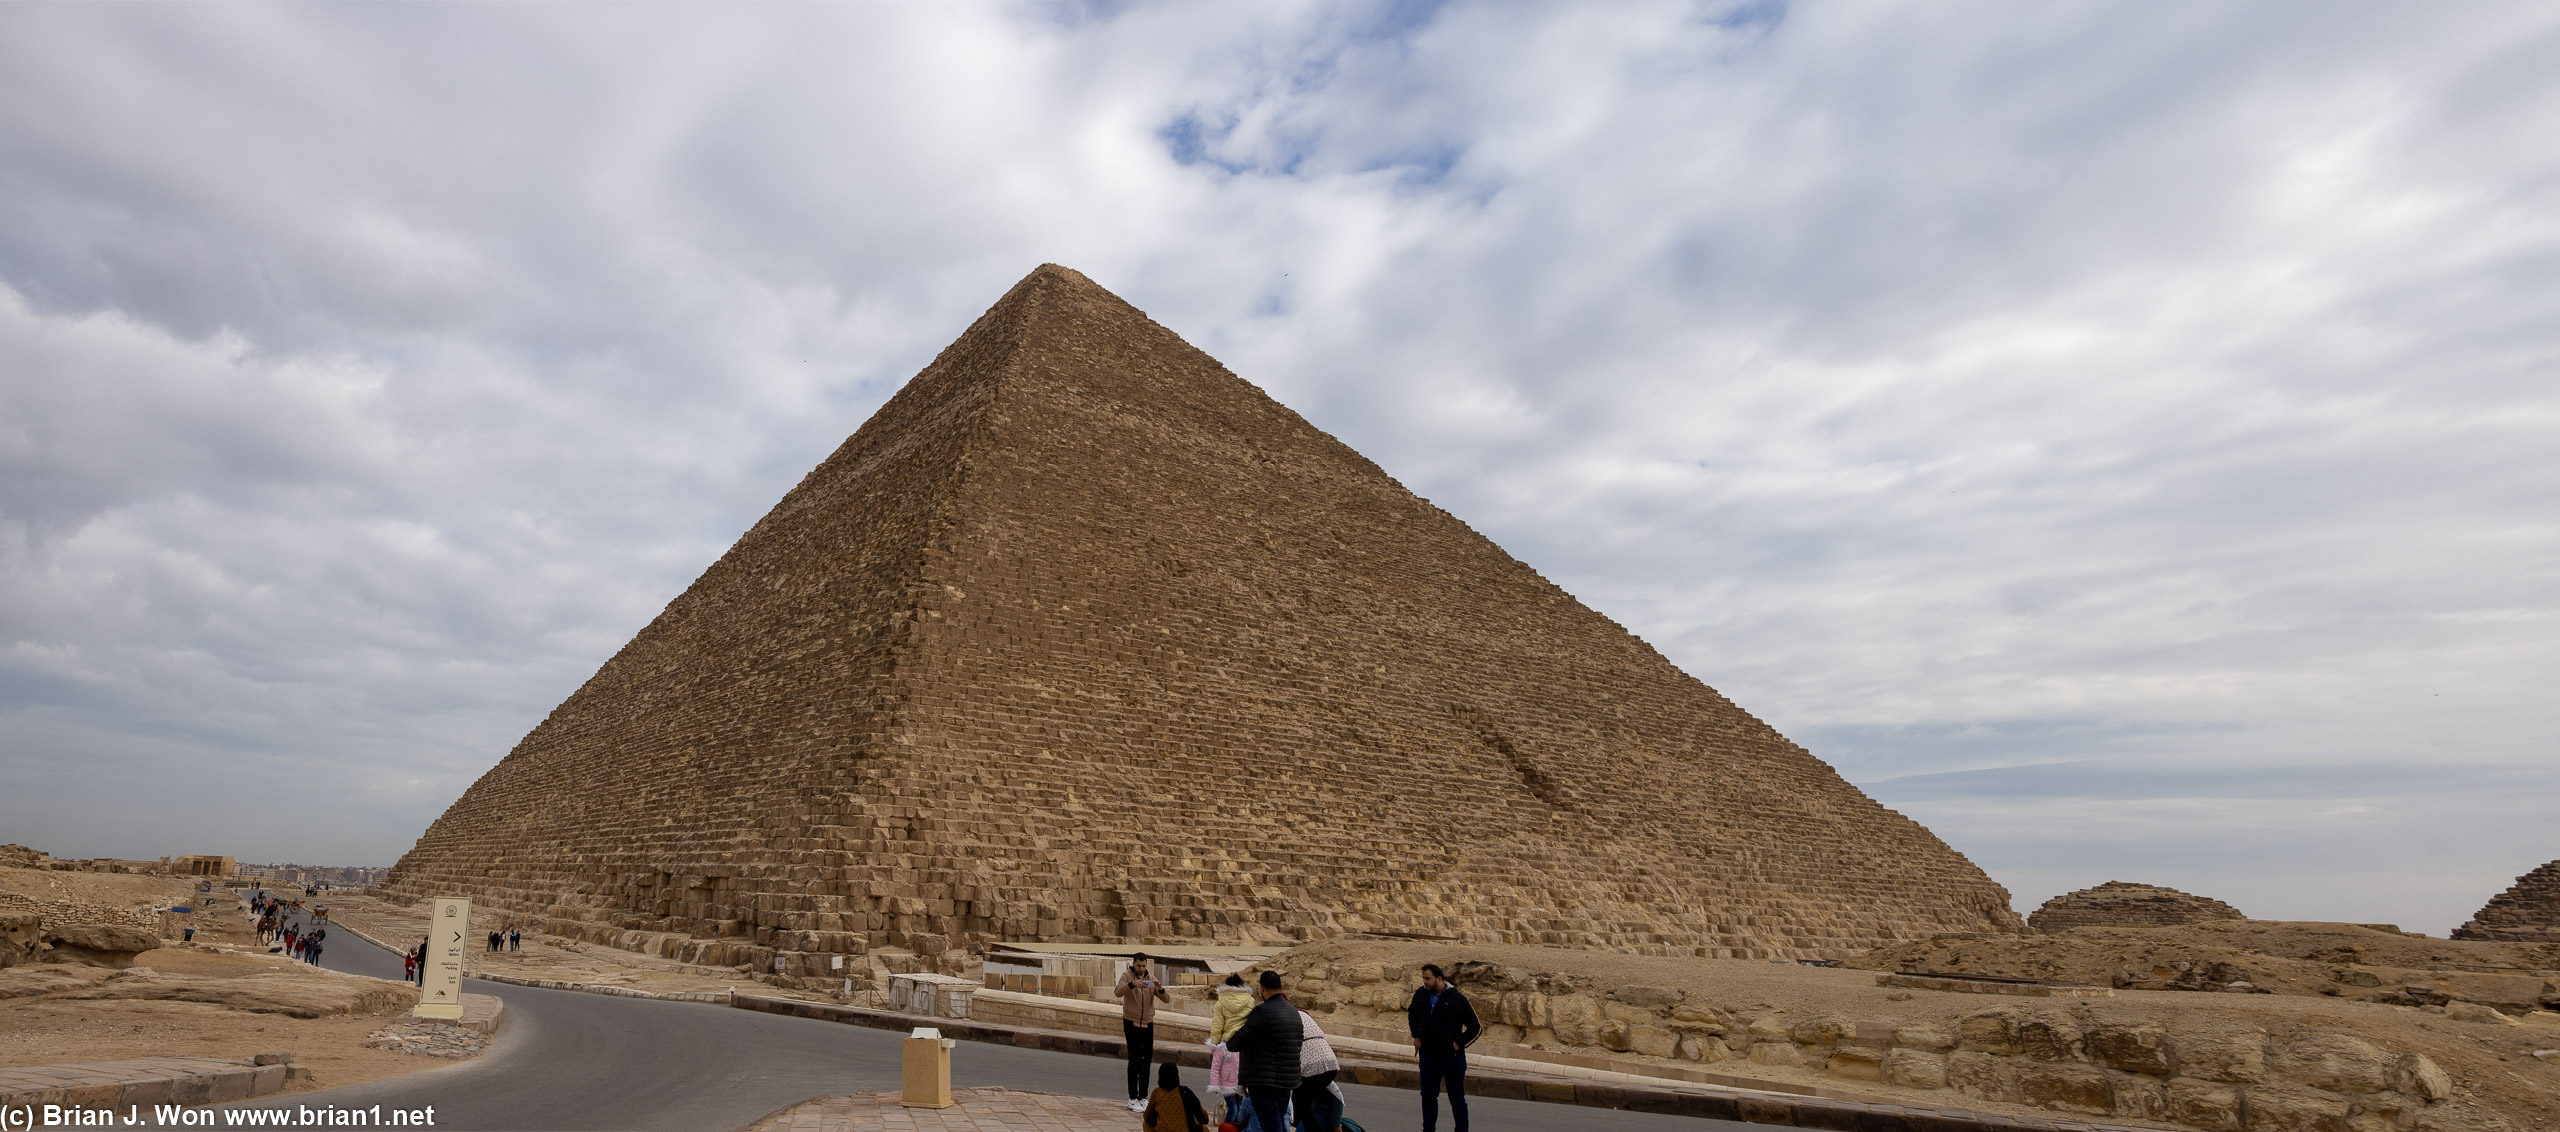 Pyramid of Cheops (also Great Pyramid of Giza or Pyramid of Khufu).